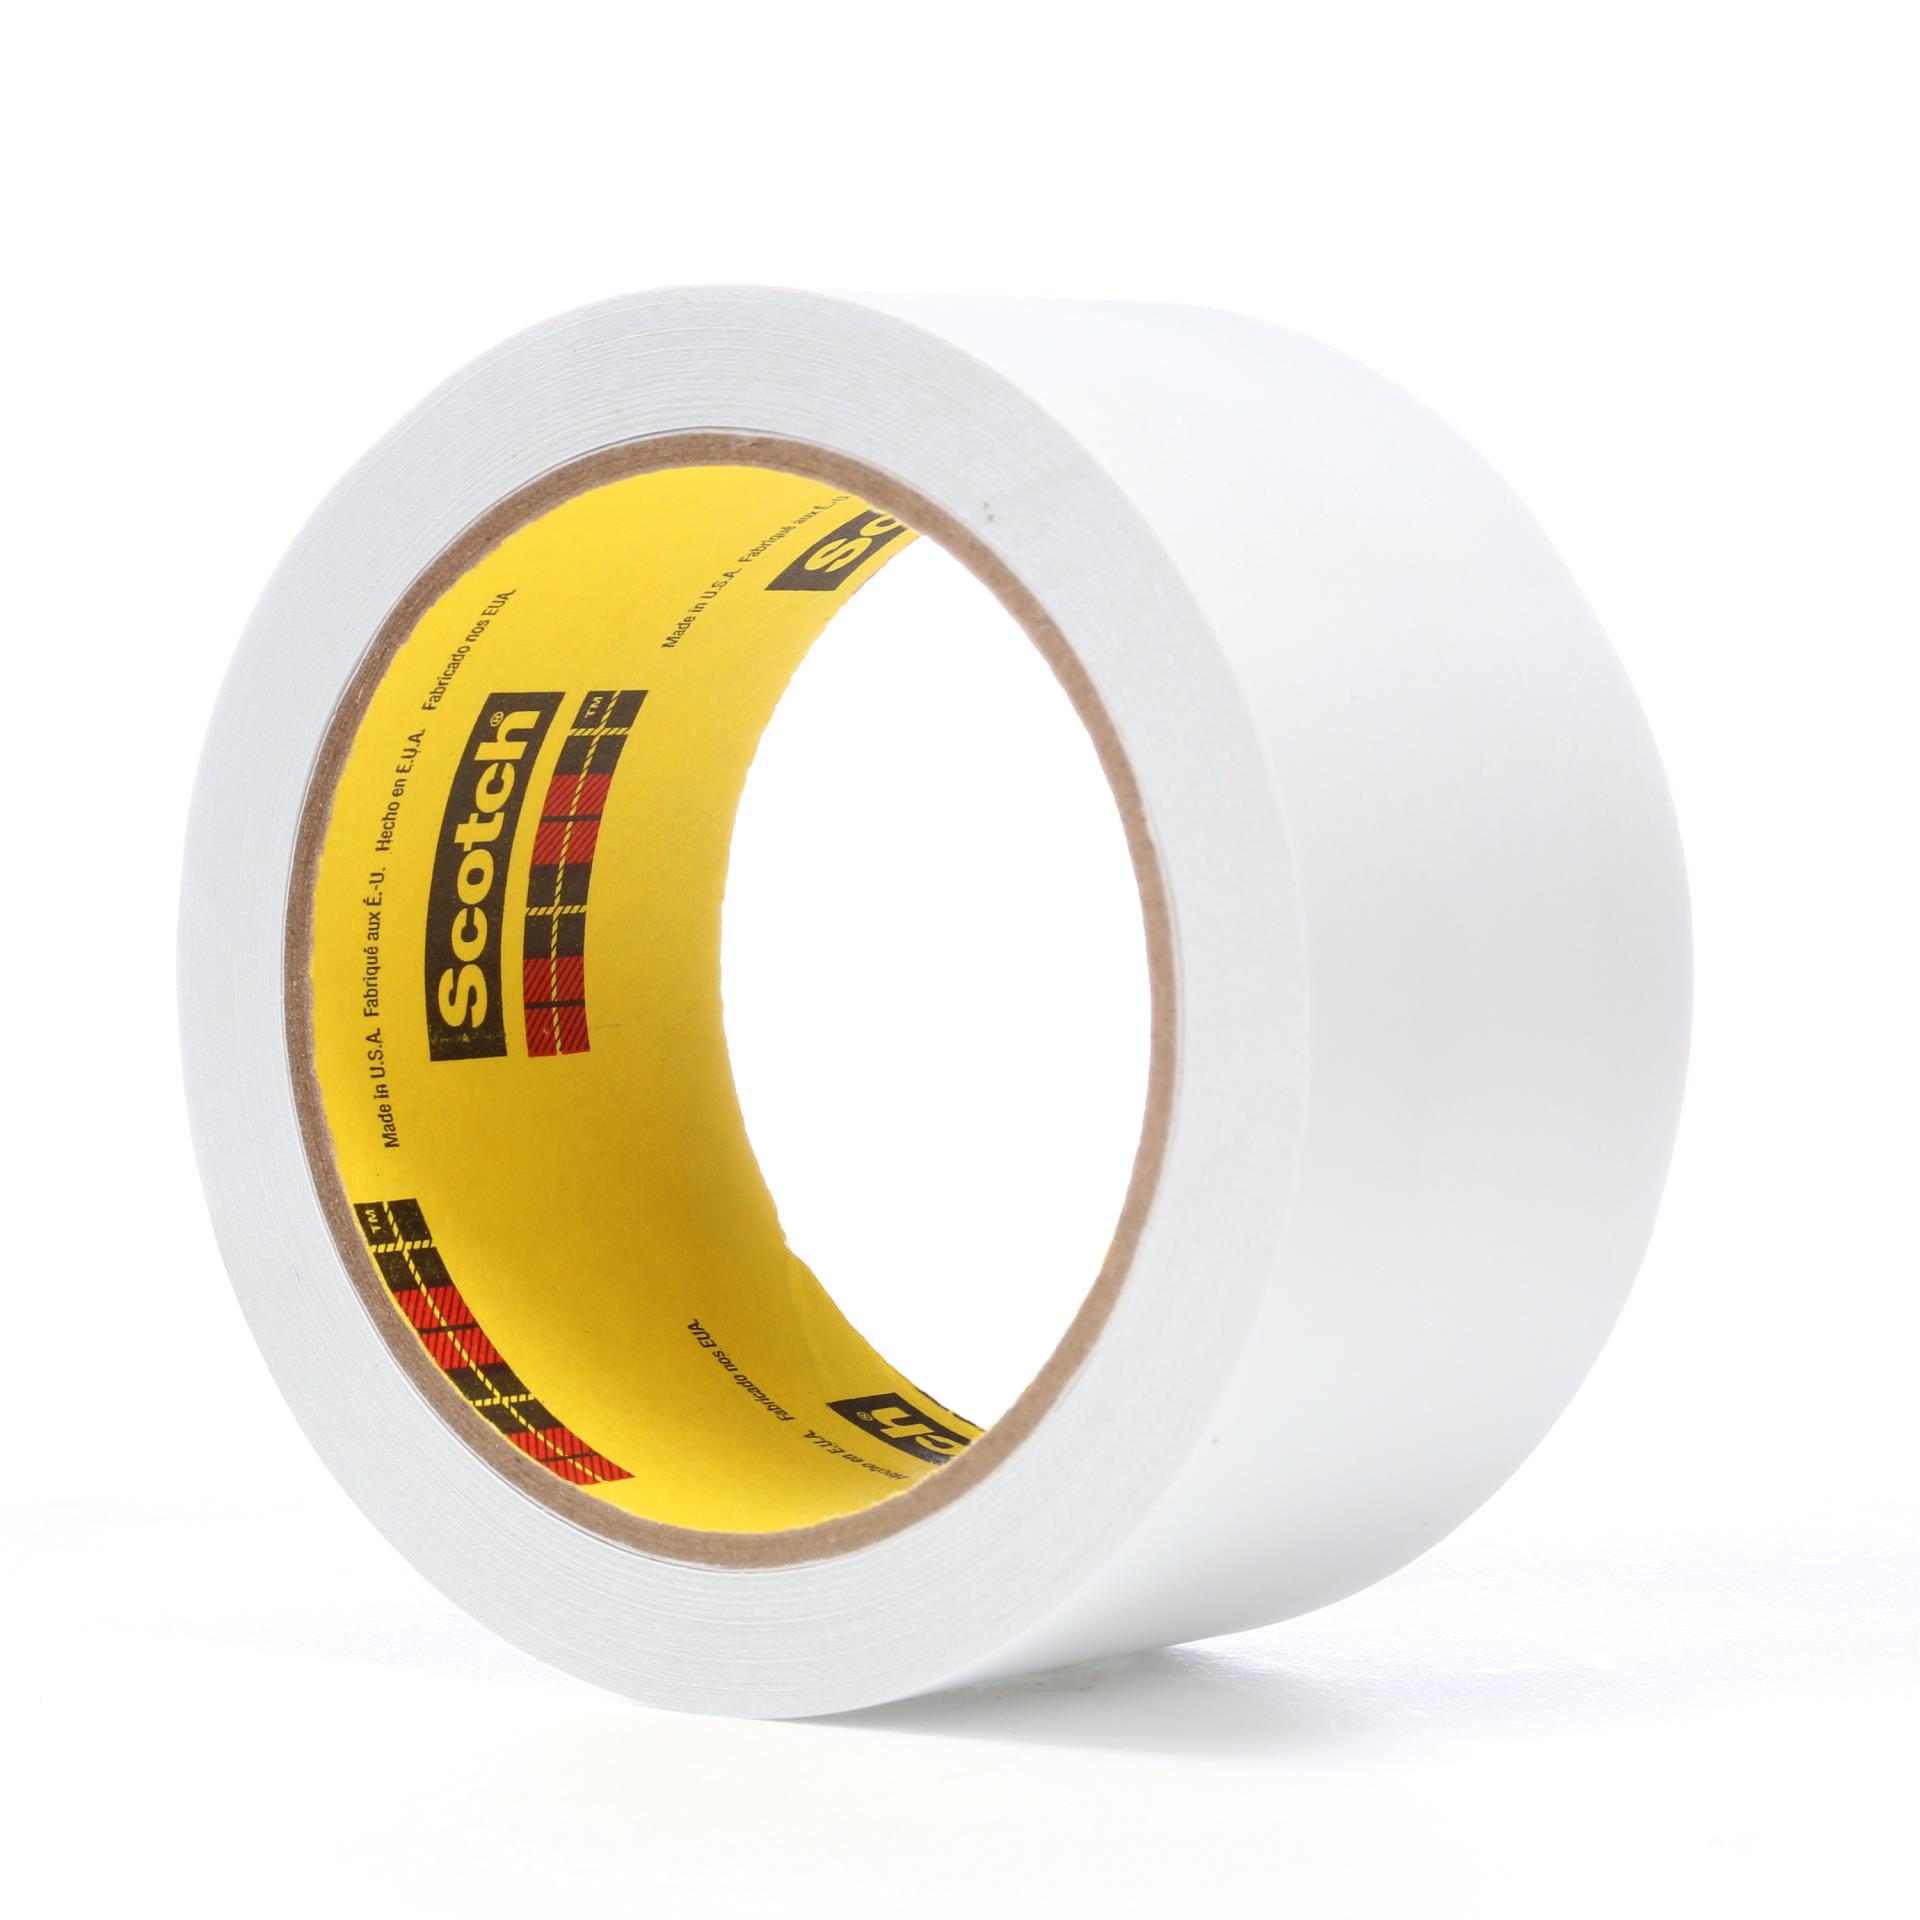 Carton Sealer tape dispenser 802 sealing device tape cutter right